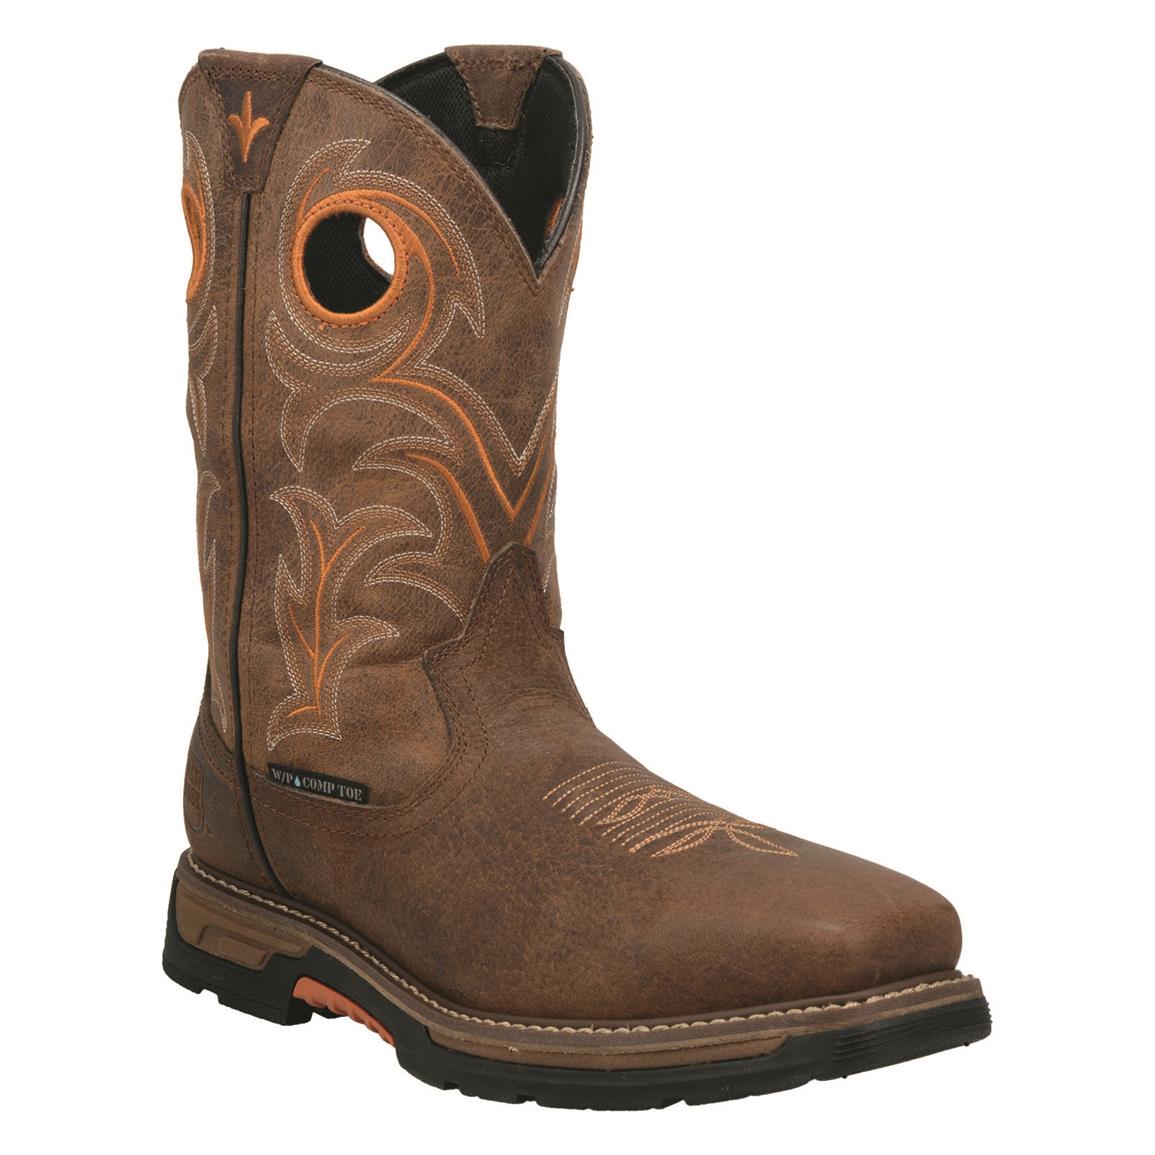 Dan Post Men's Storms Eye Waterproof Western Work Boots, Rust/orange